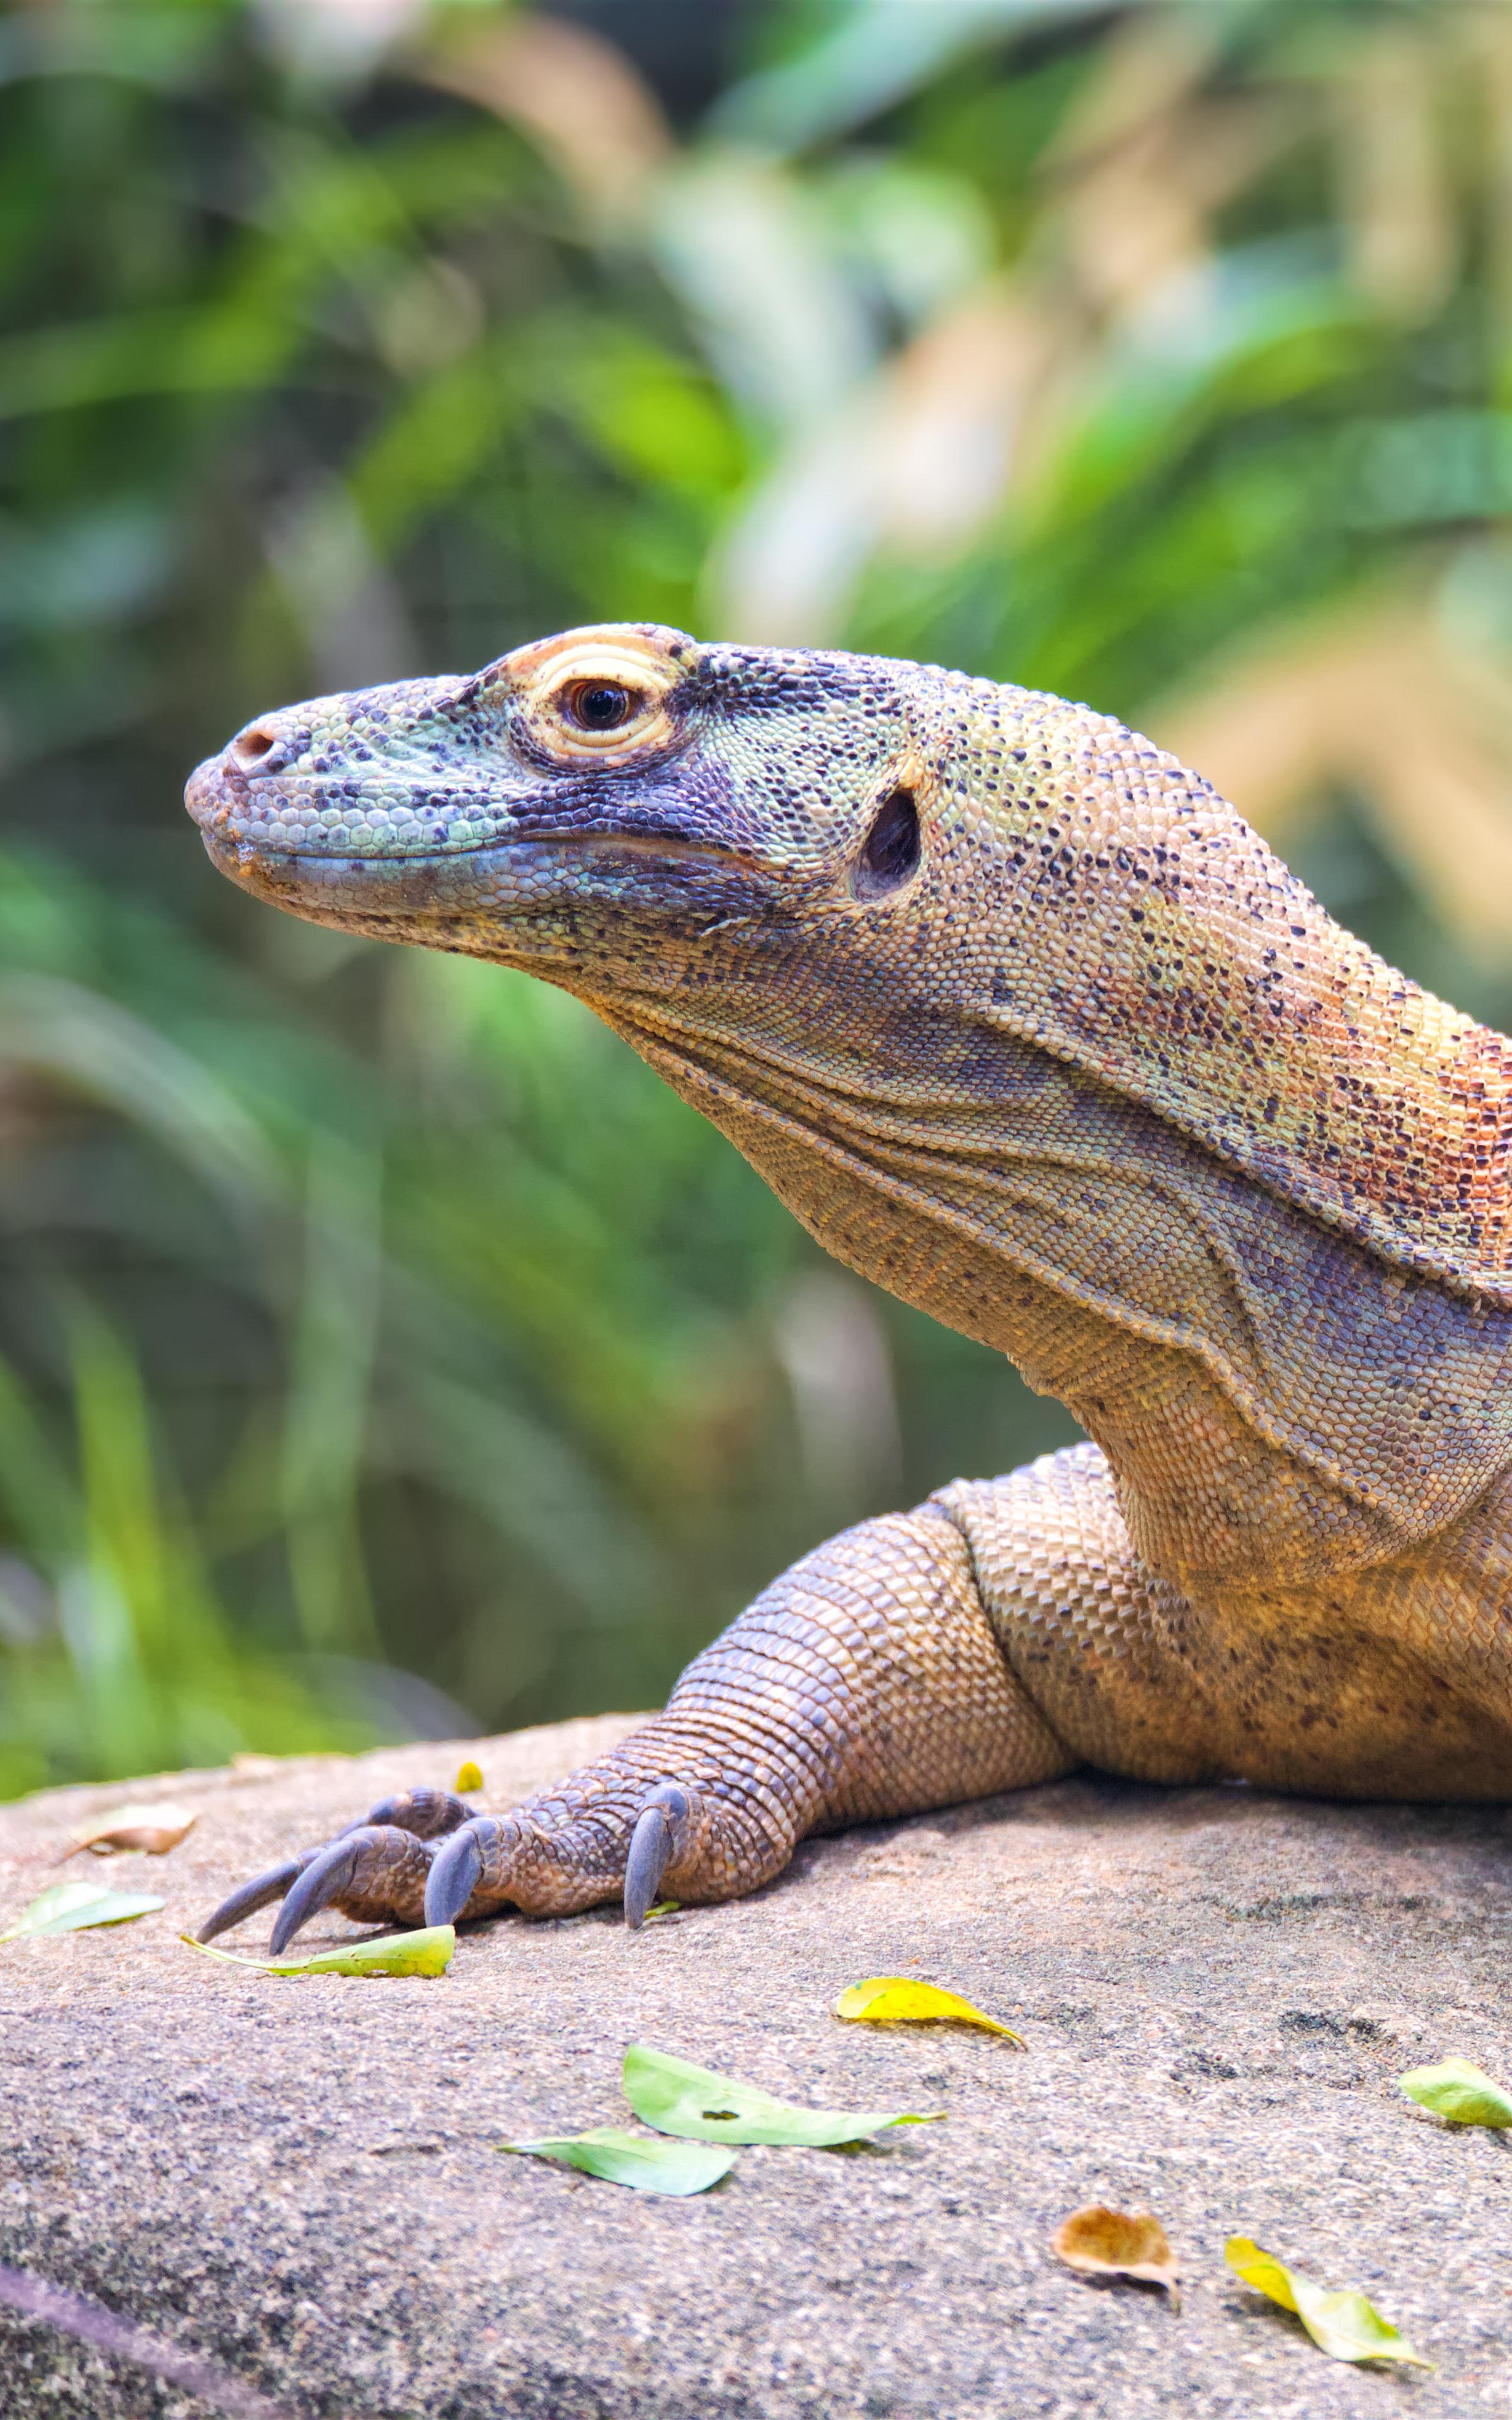 Beautiful News - A Komodo Dragon from Indonesia